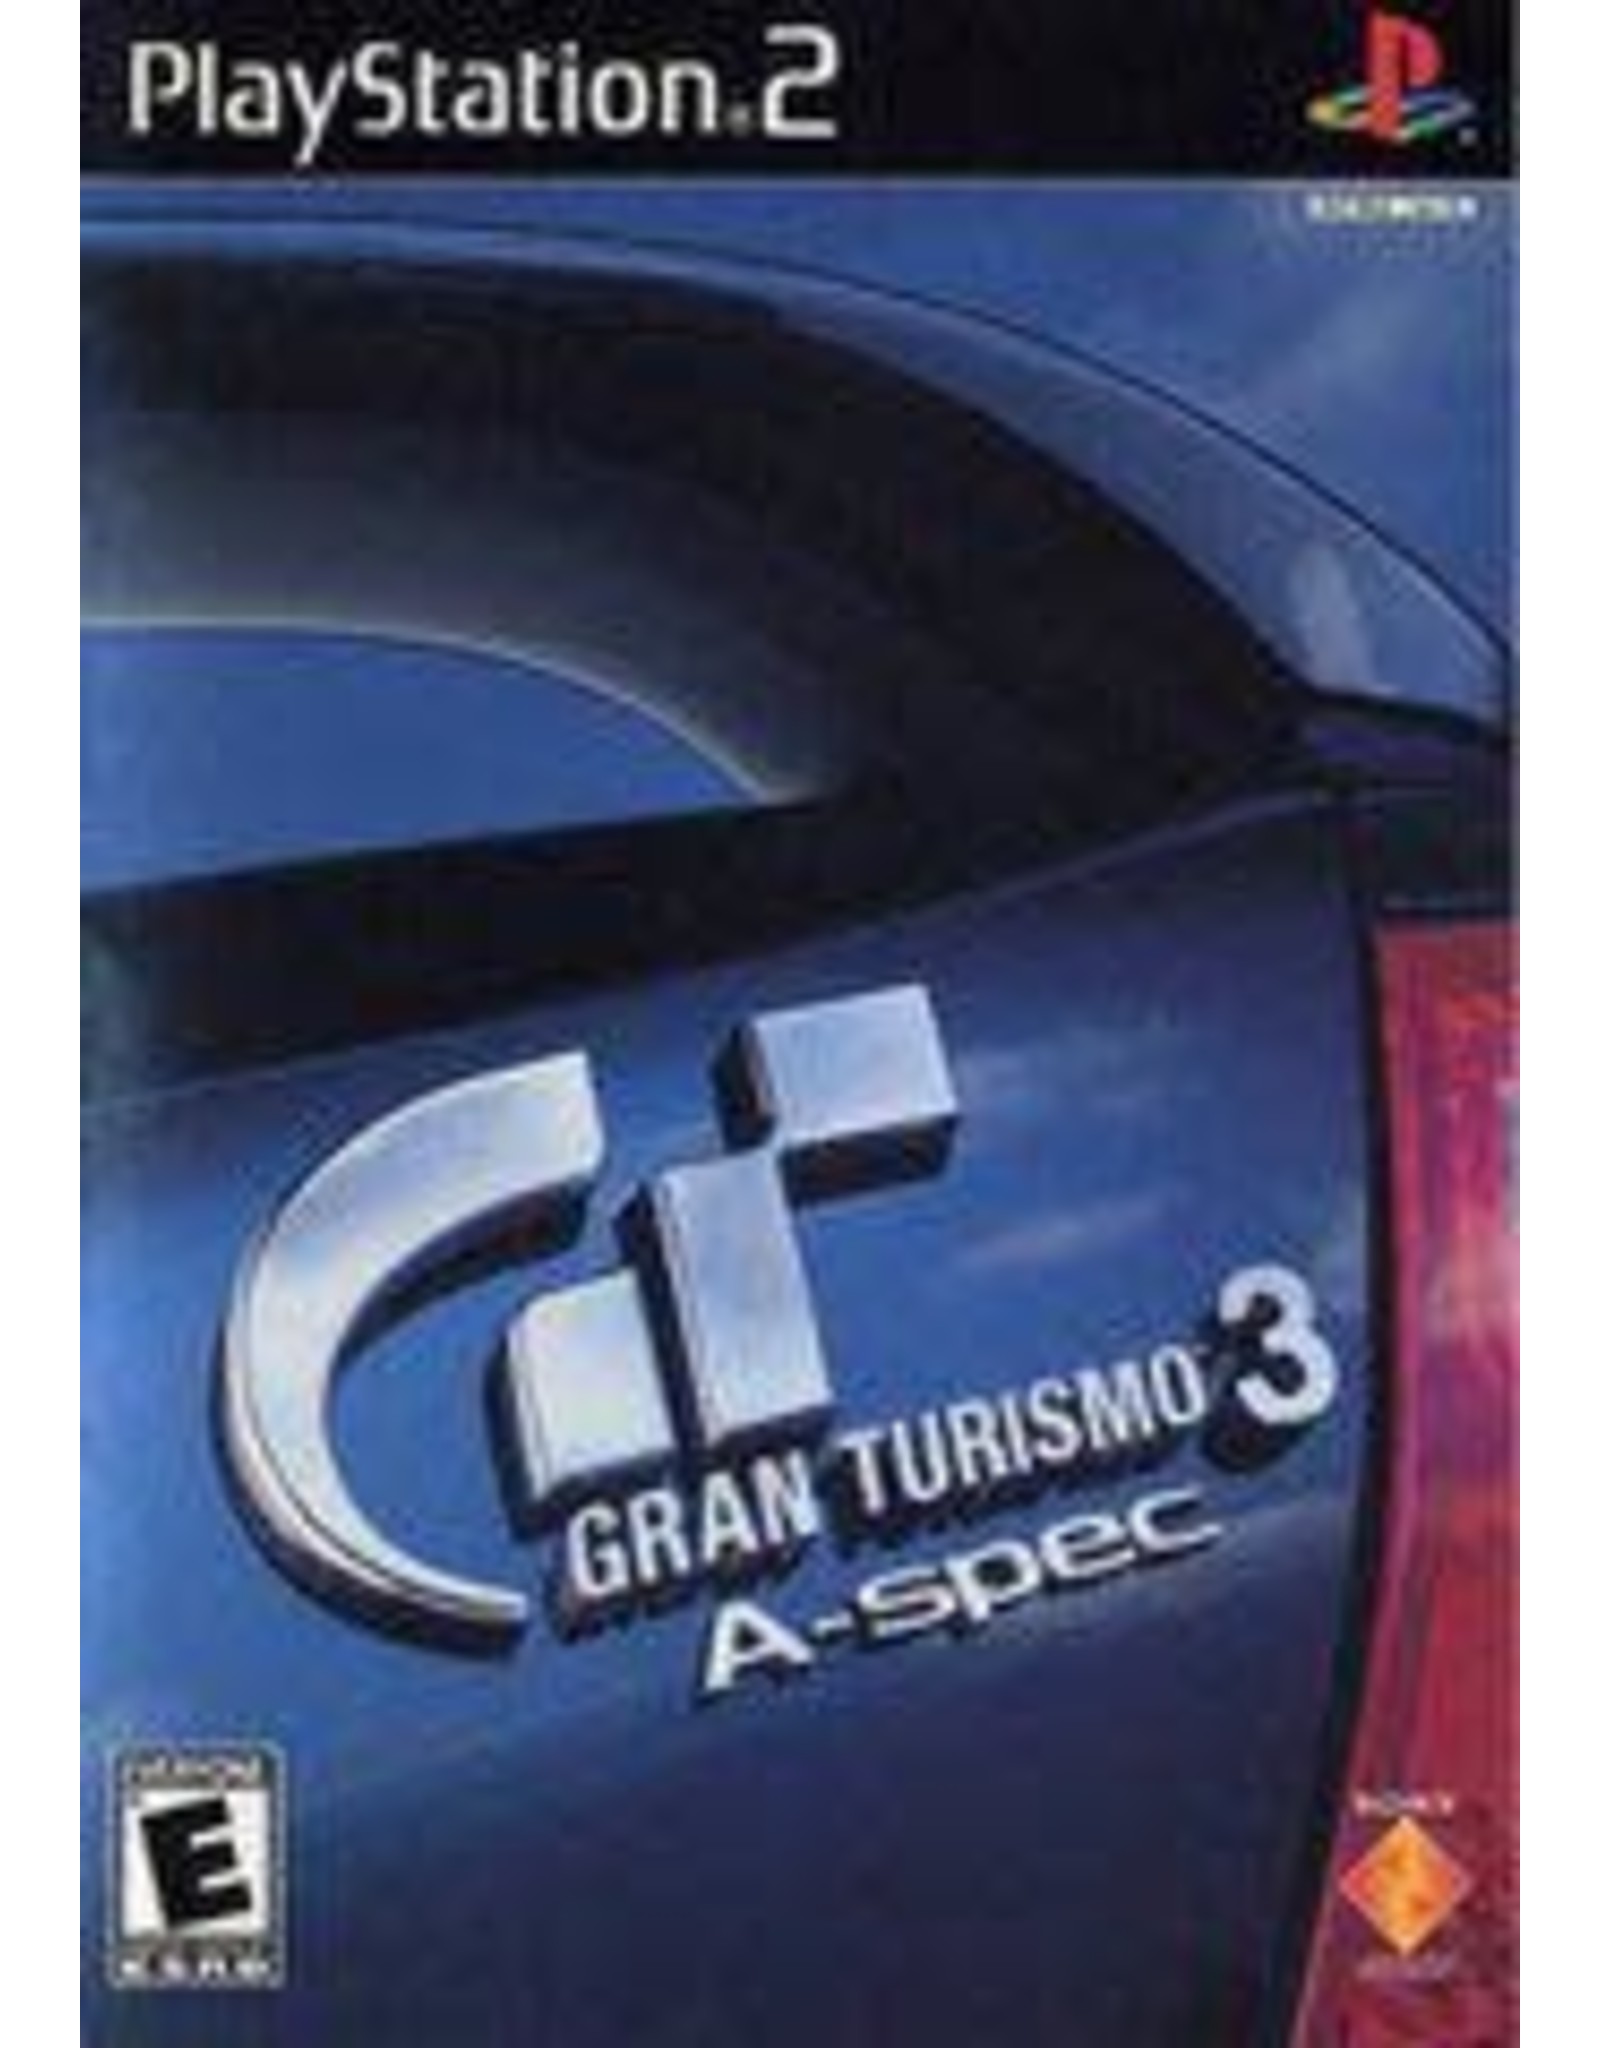 Playstation 2 Gran Turismo 3 (CiB)